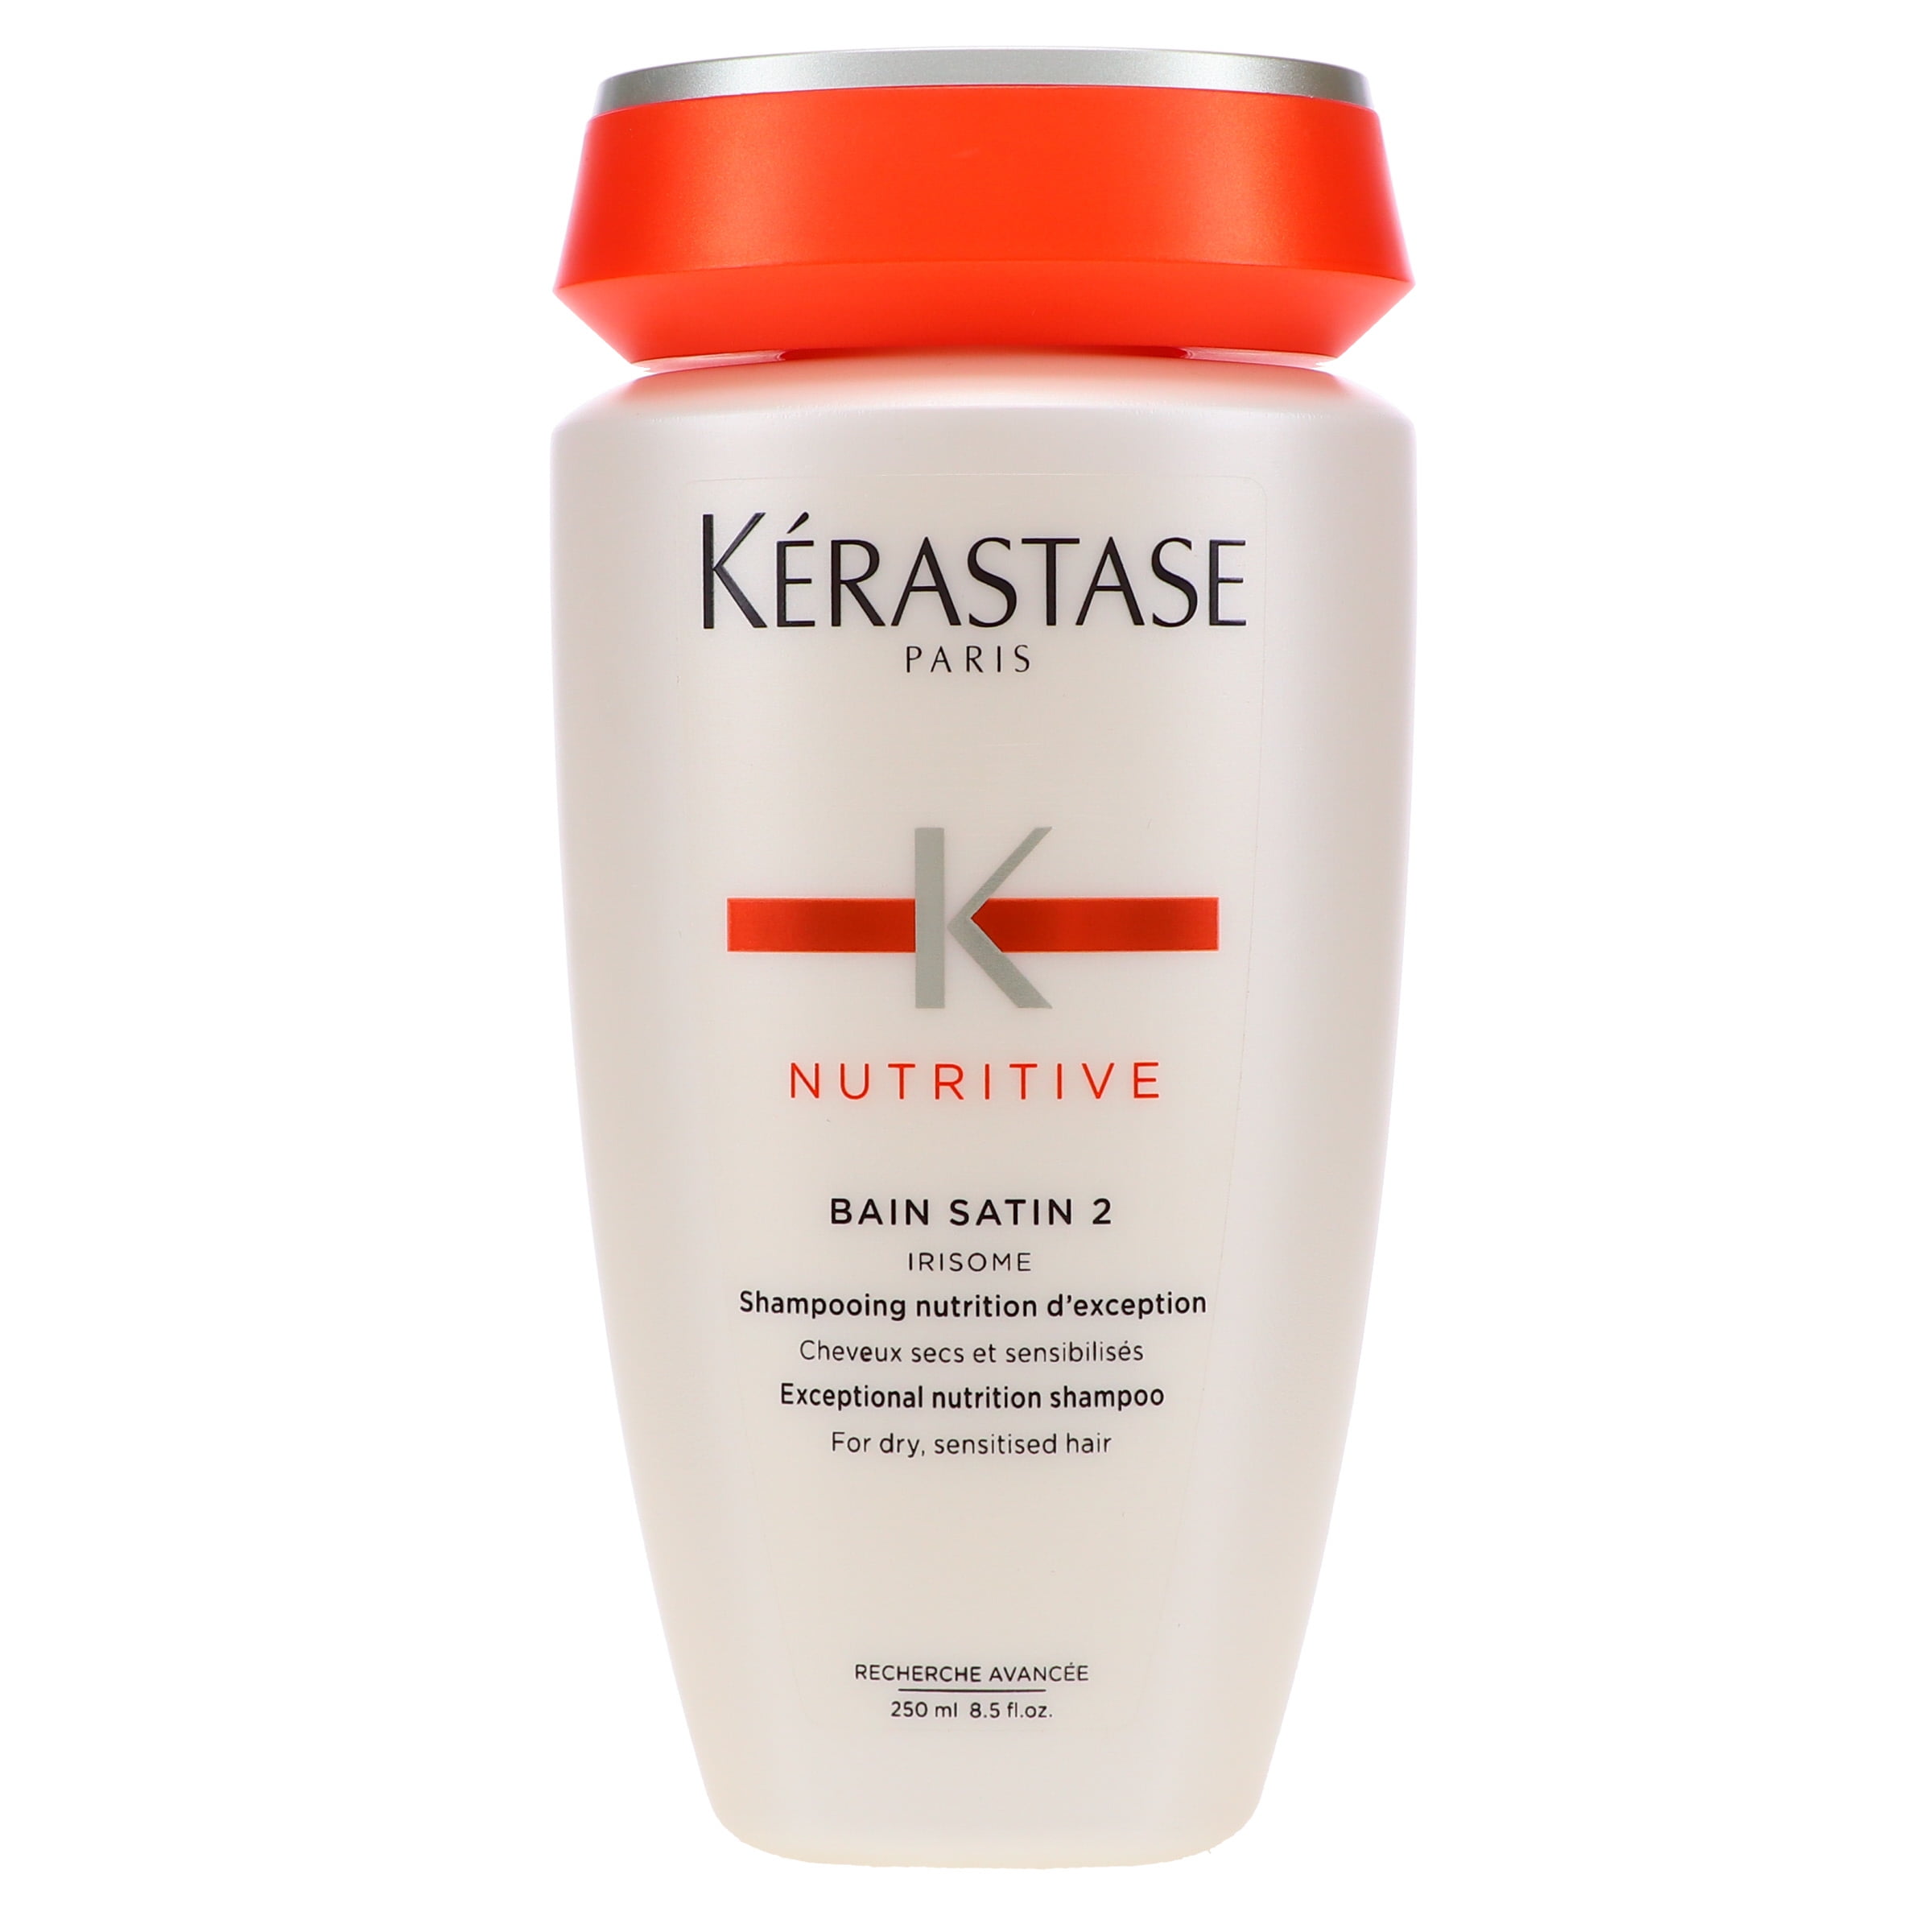 Kerastase Nutritive Bain Satin 2 Complete Nutrition Shampoo 8.5 oz - image 1 of 8